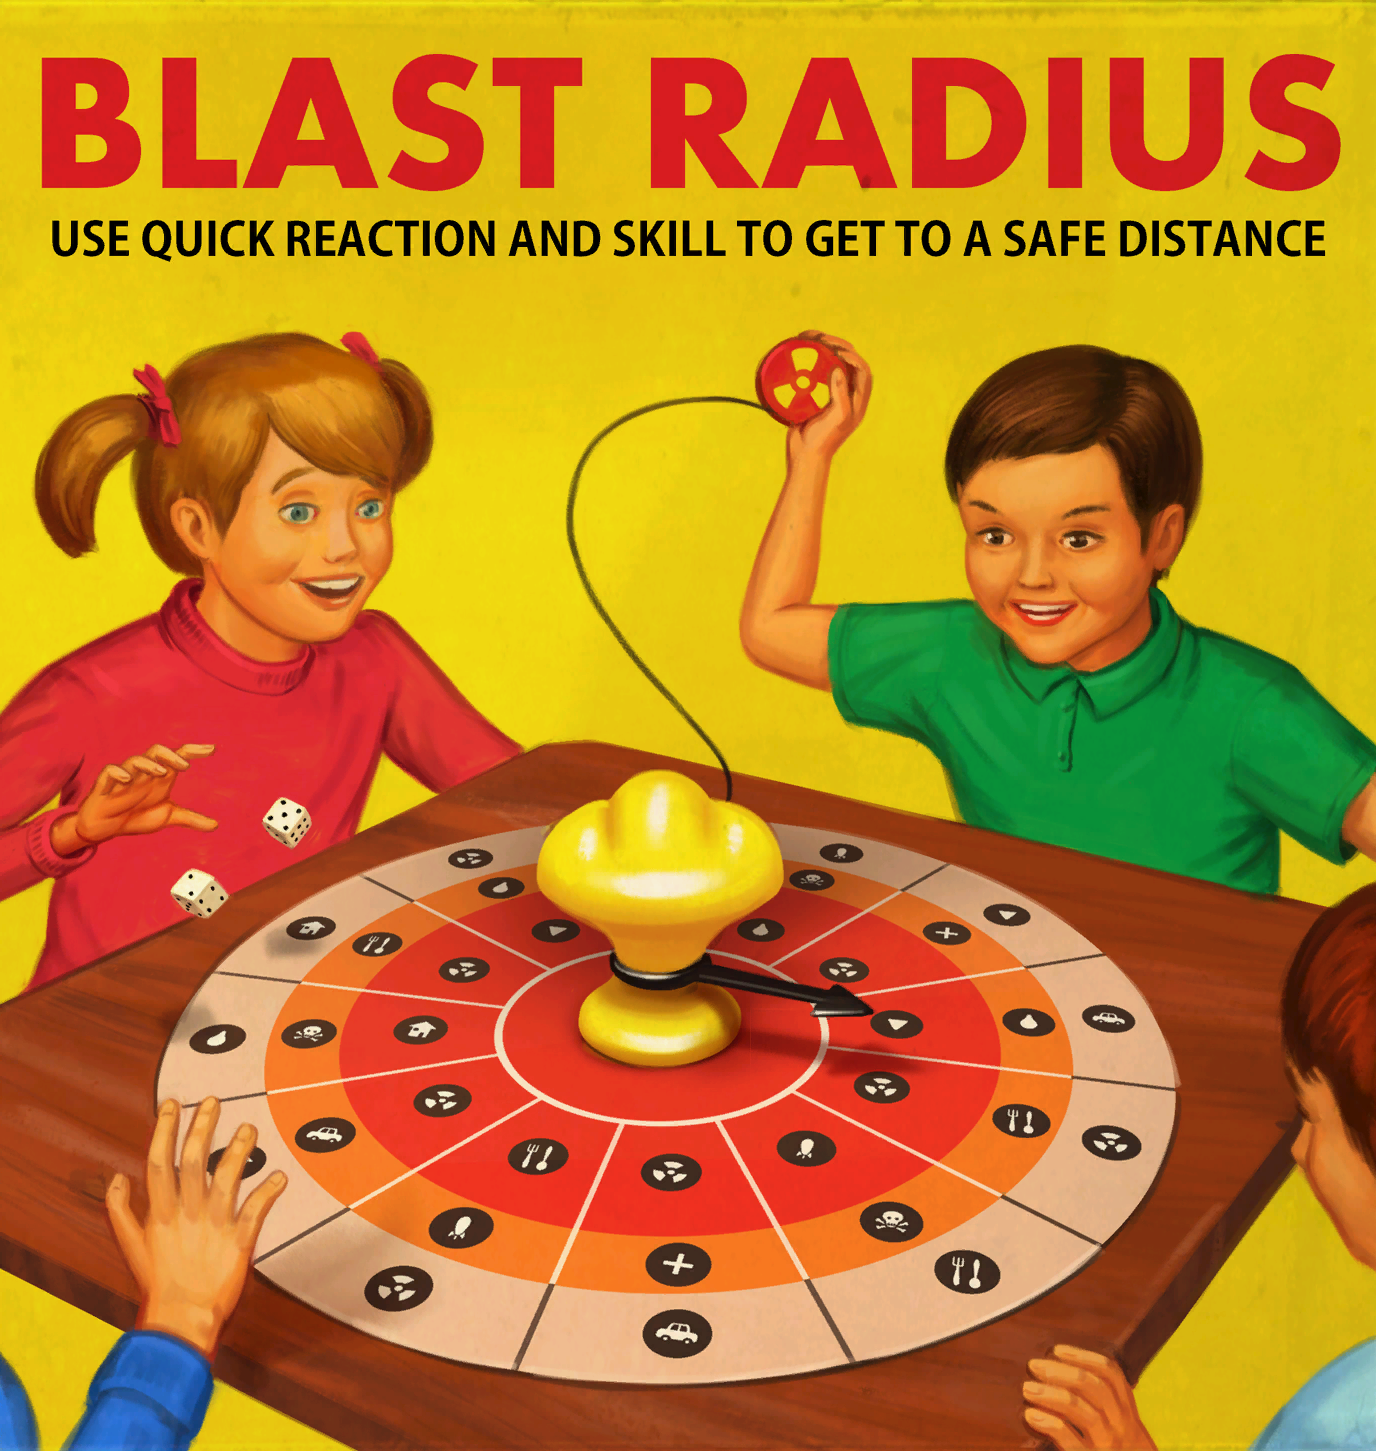 Blast radius